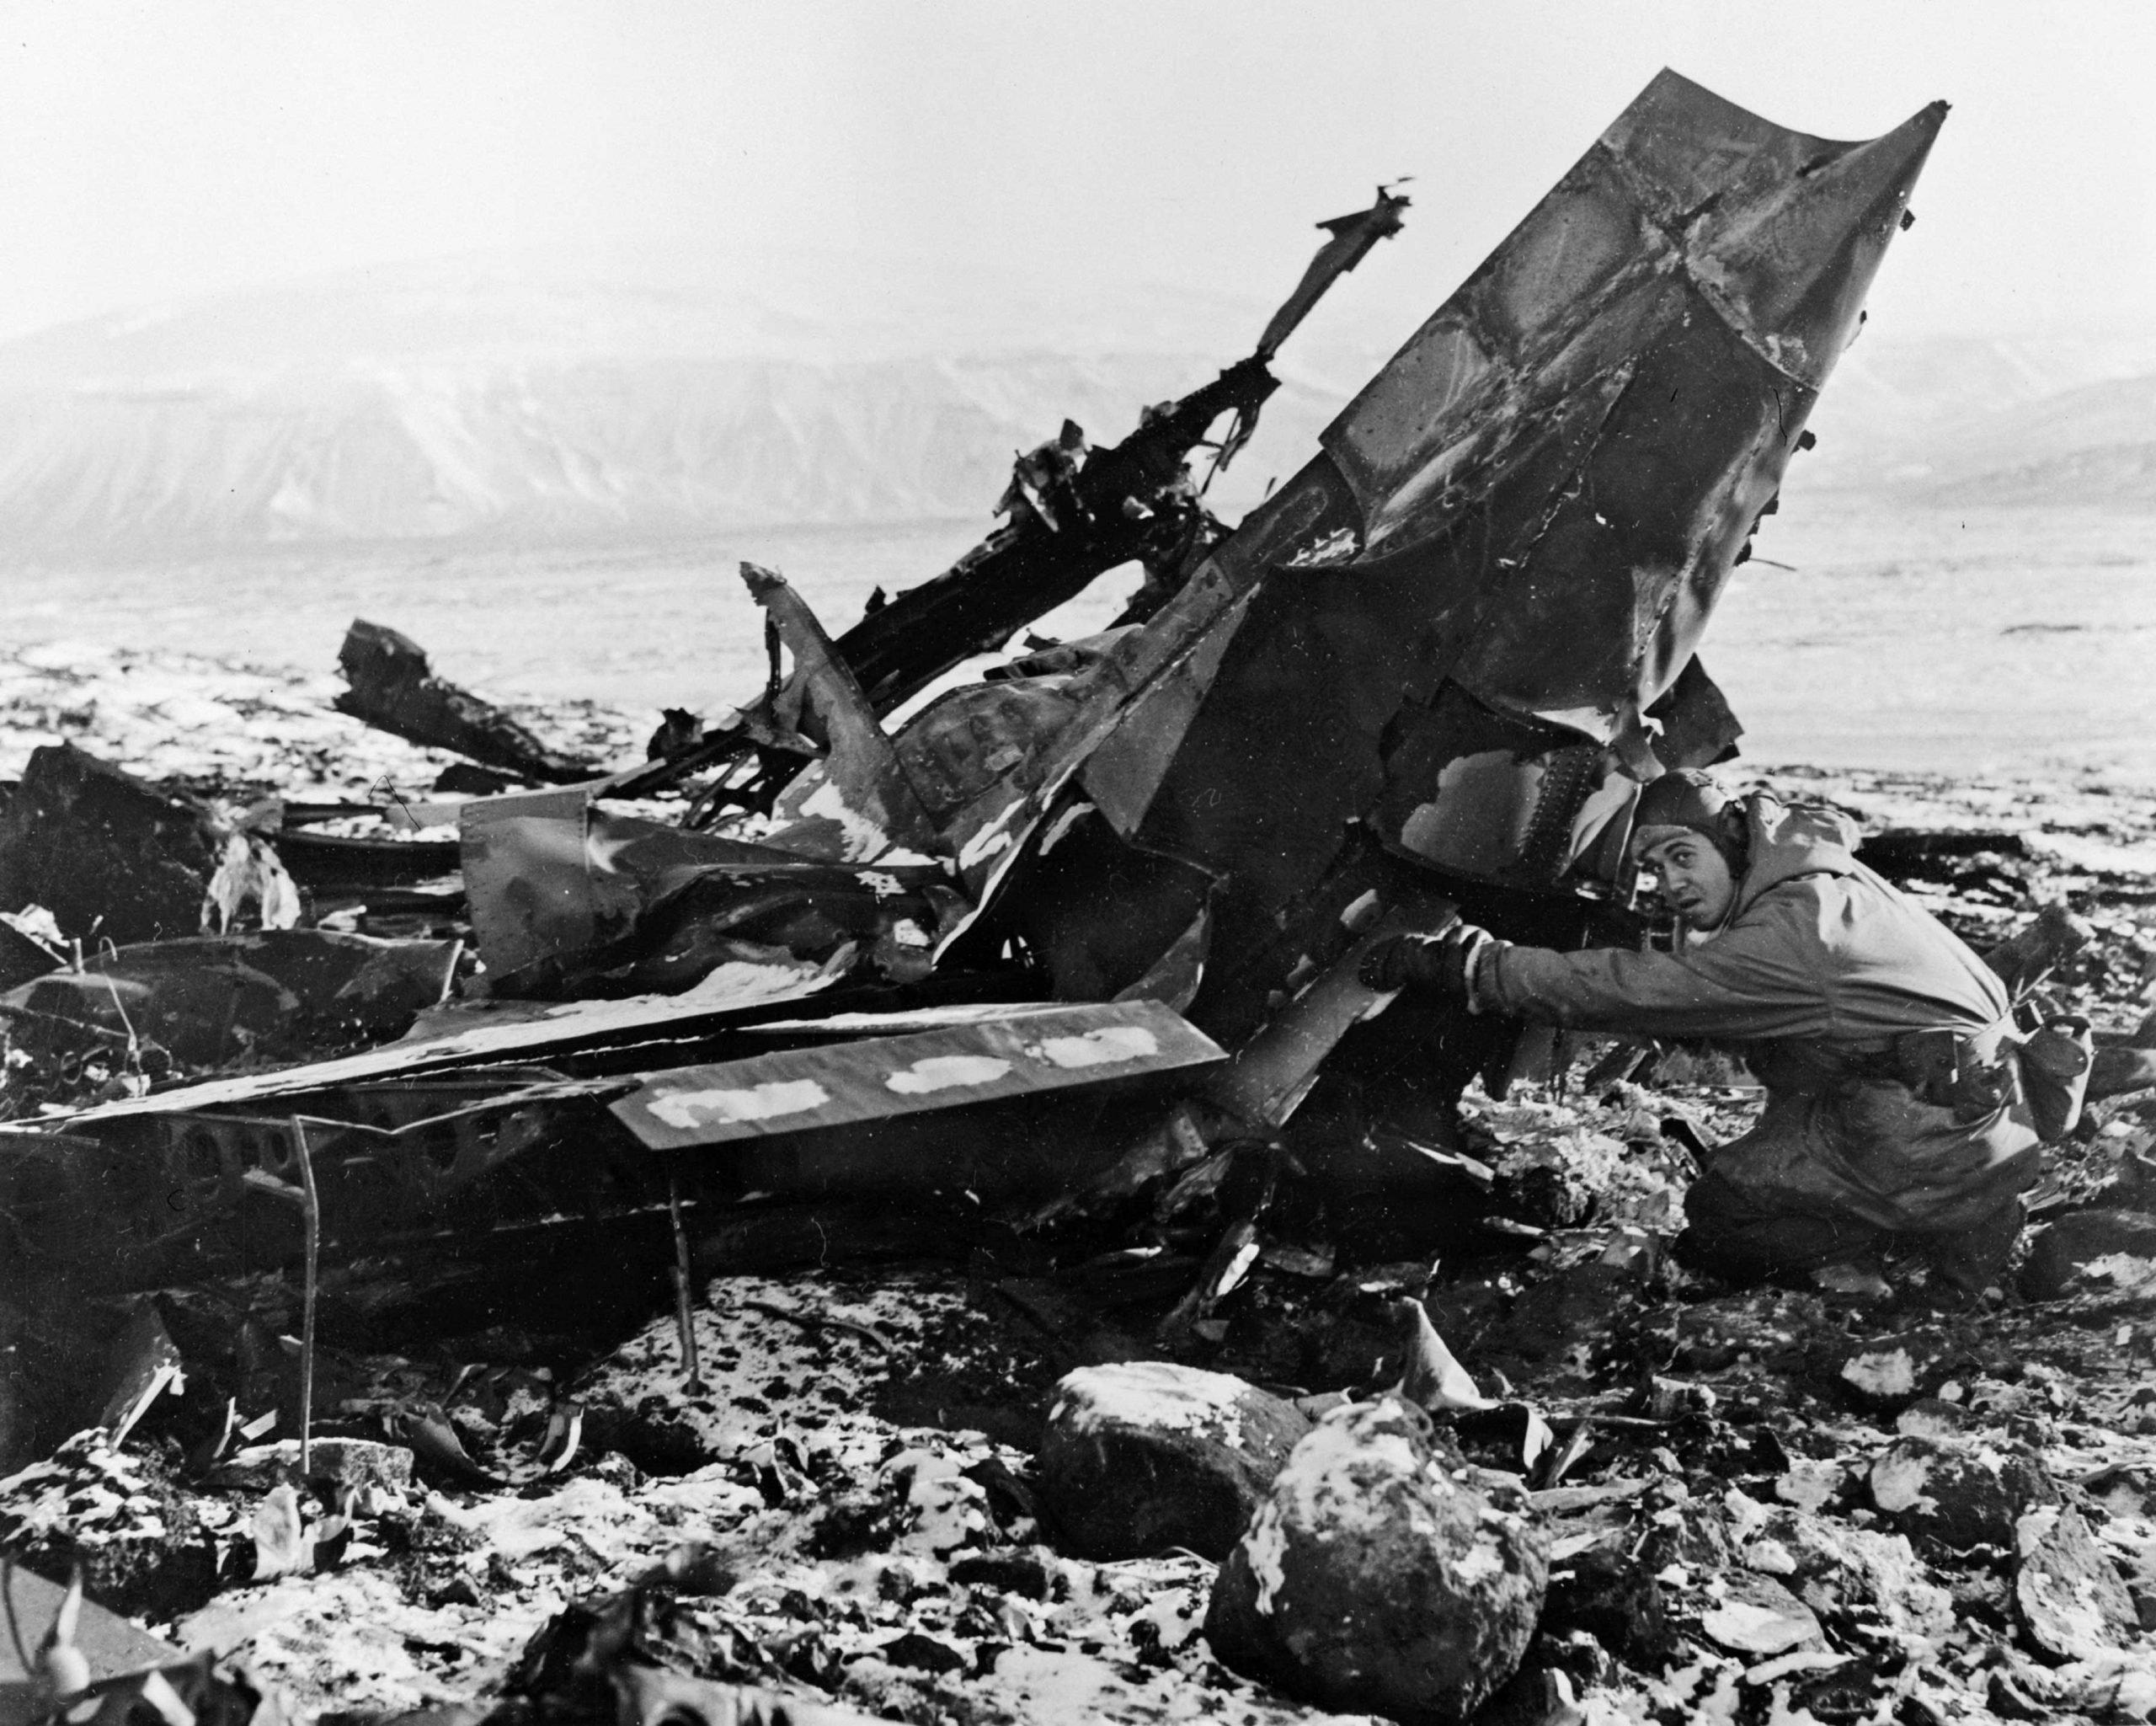 The wreckage of the German Focke-Wulf Fw.200